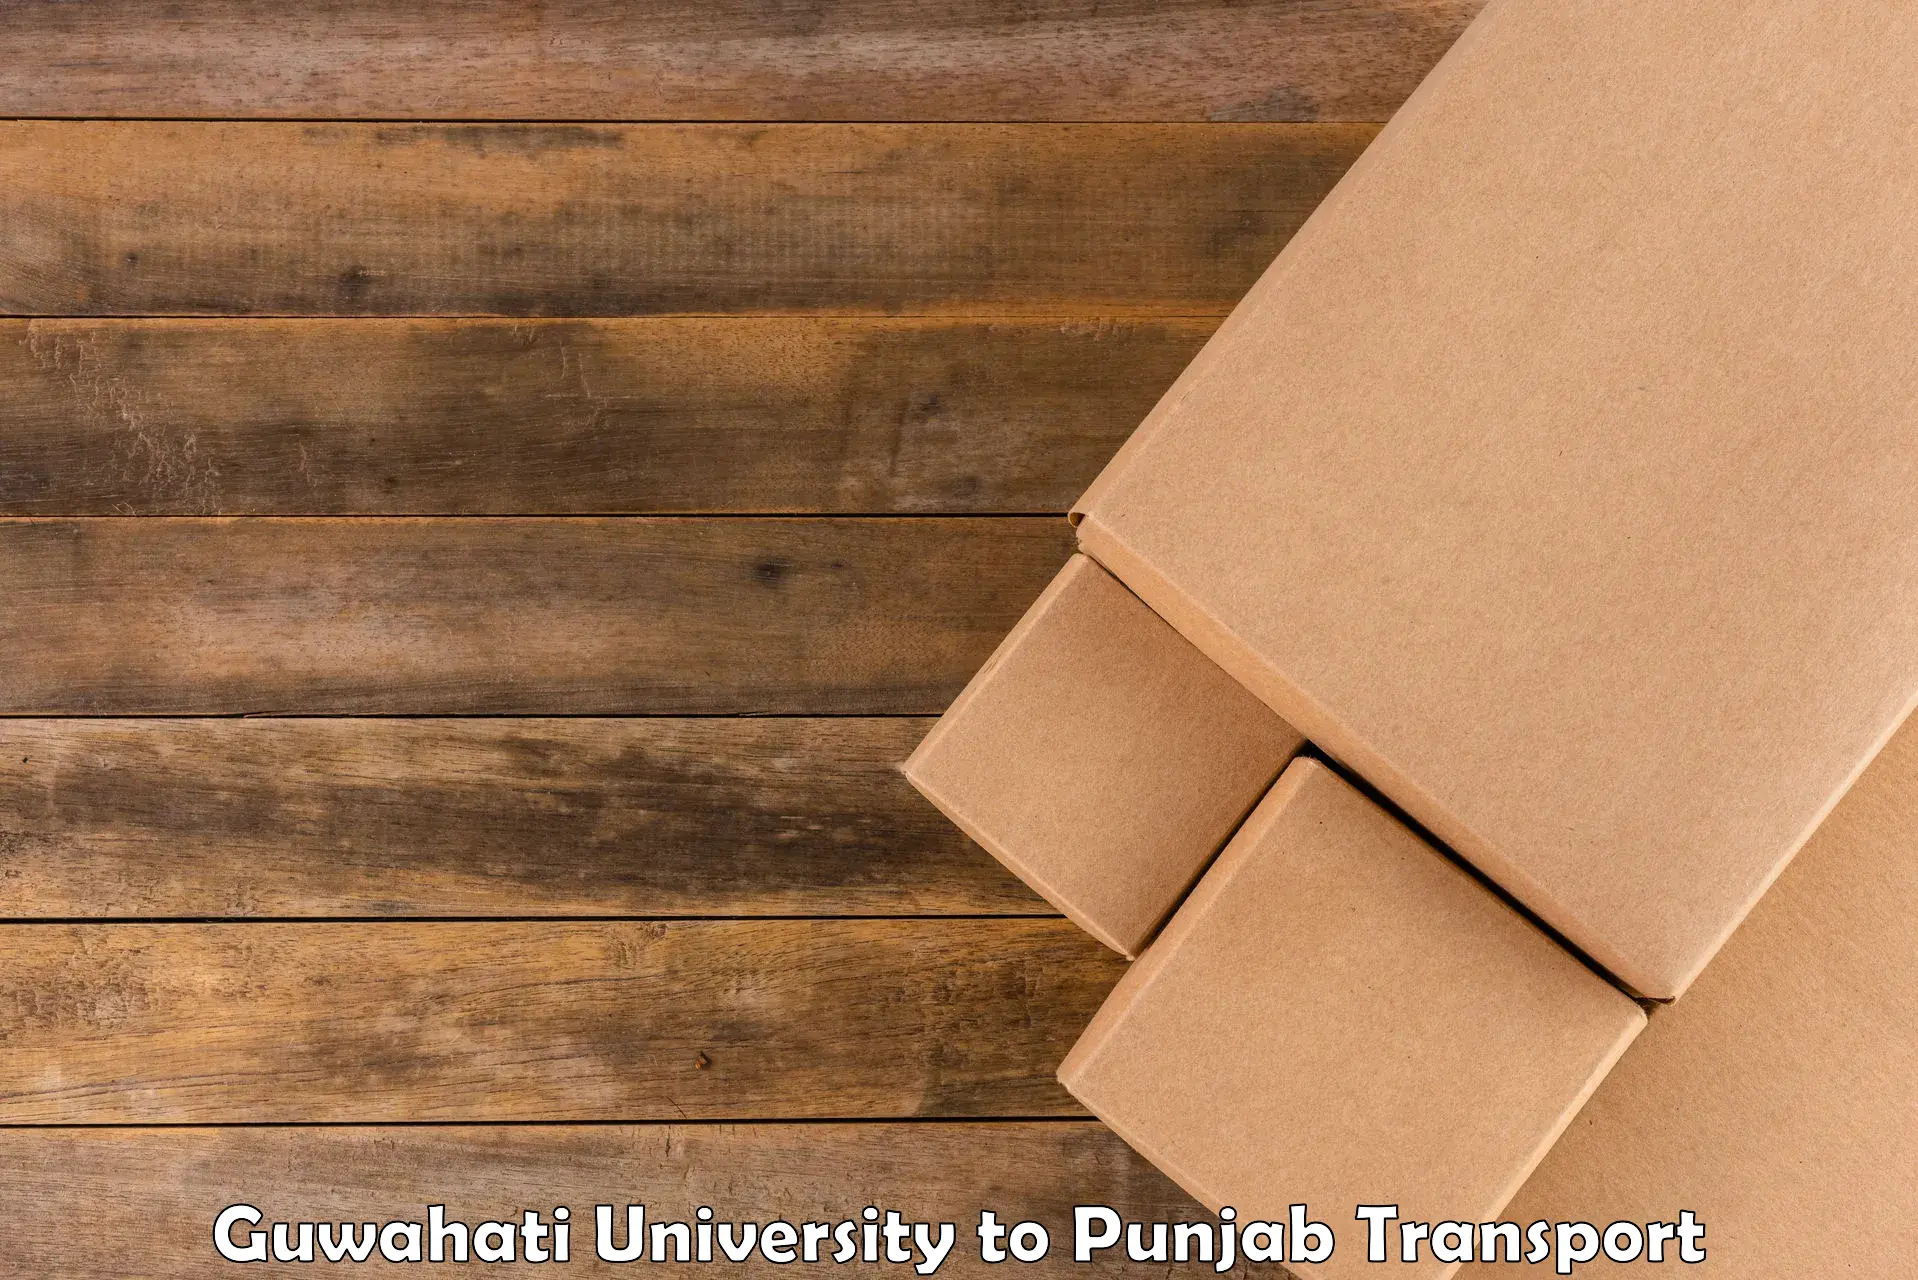 Daily transport service Guwahati University to Amritsar